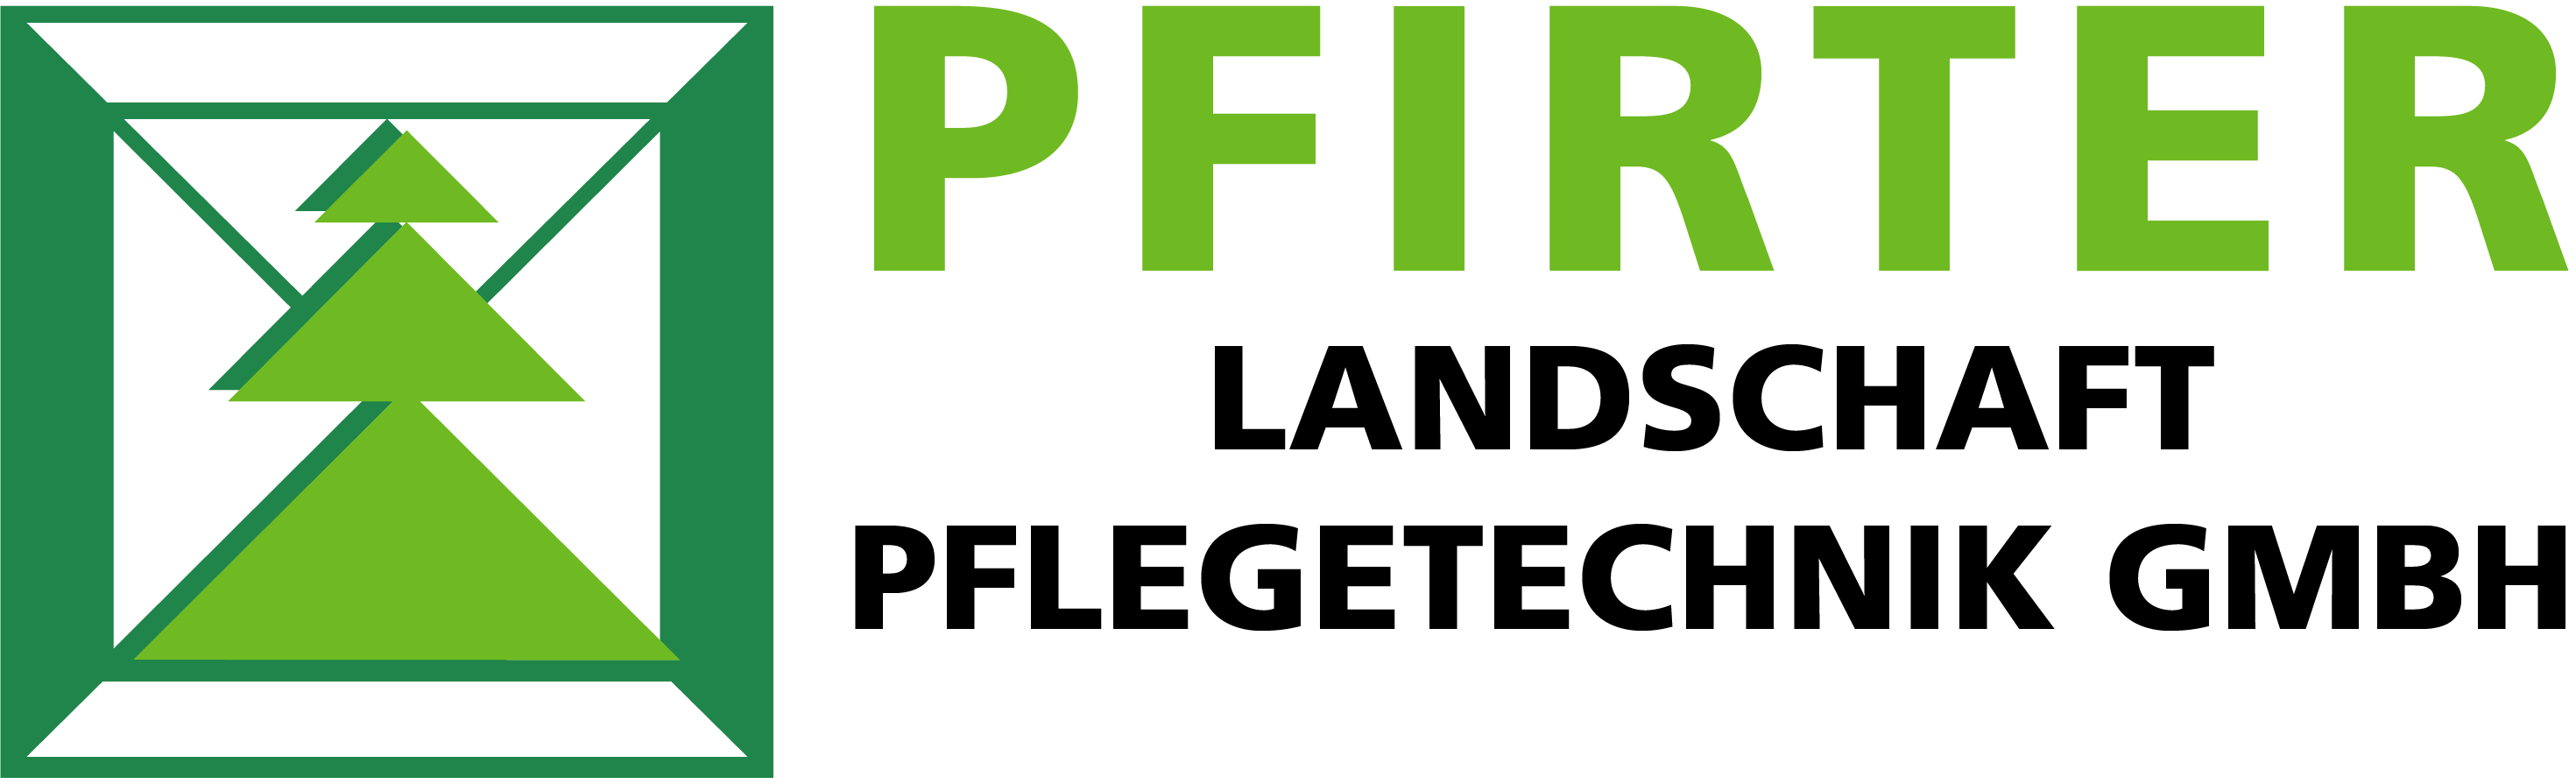 Pfirter Landschaft Pflegetechnik GmbH